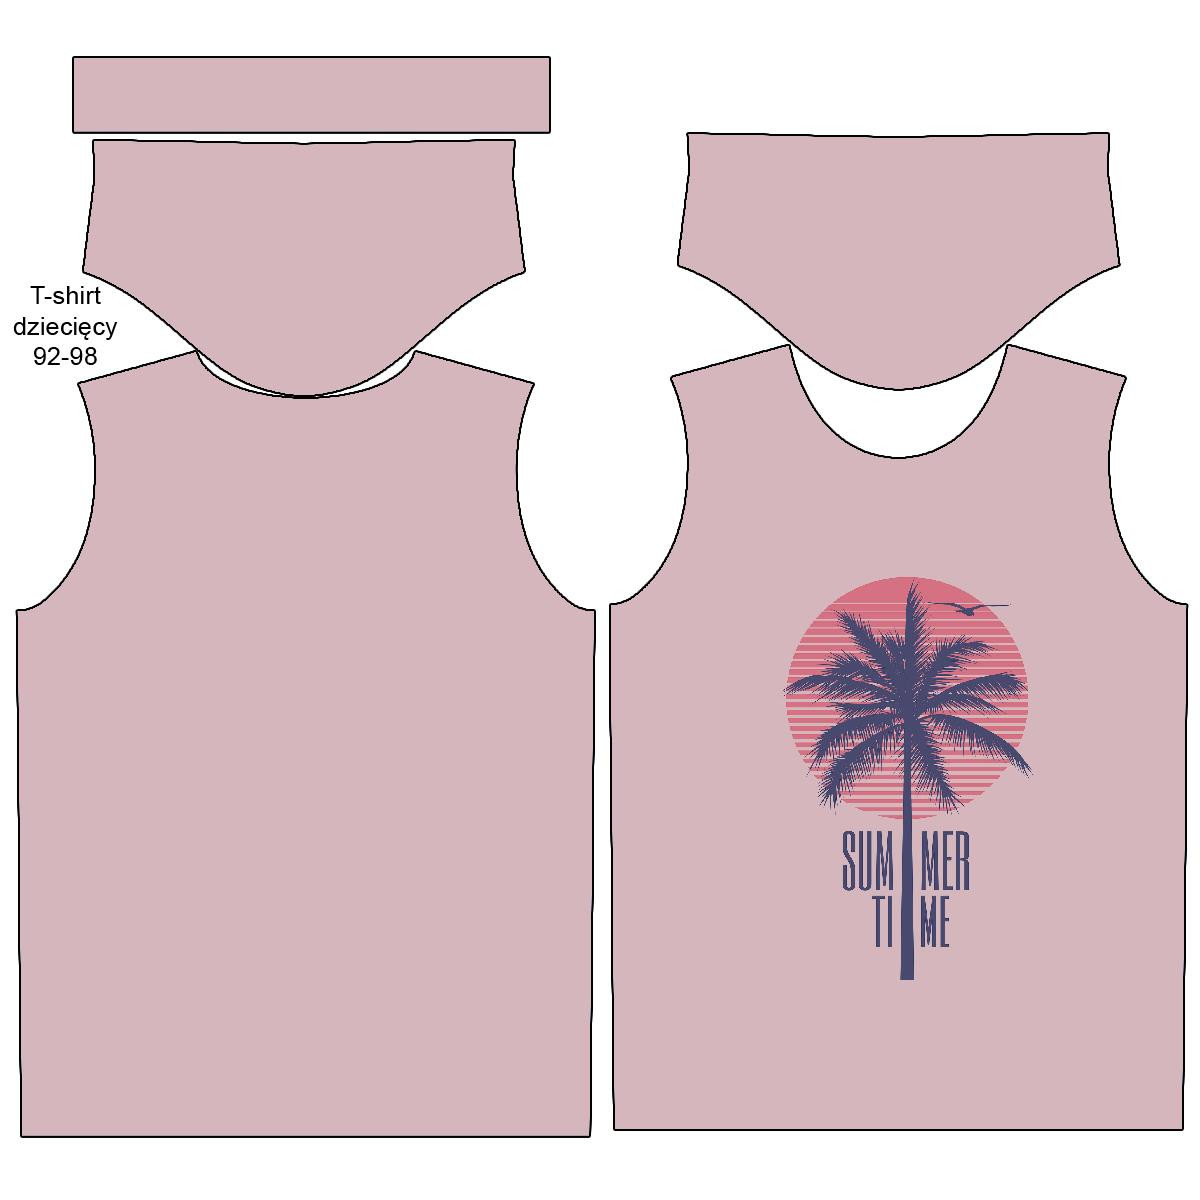 T-SHIRT DZIECIĘCY - SUMMER TIME / róż - single jersey